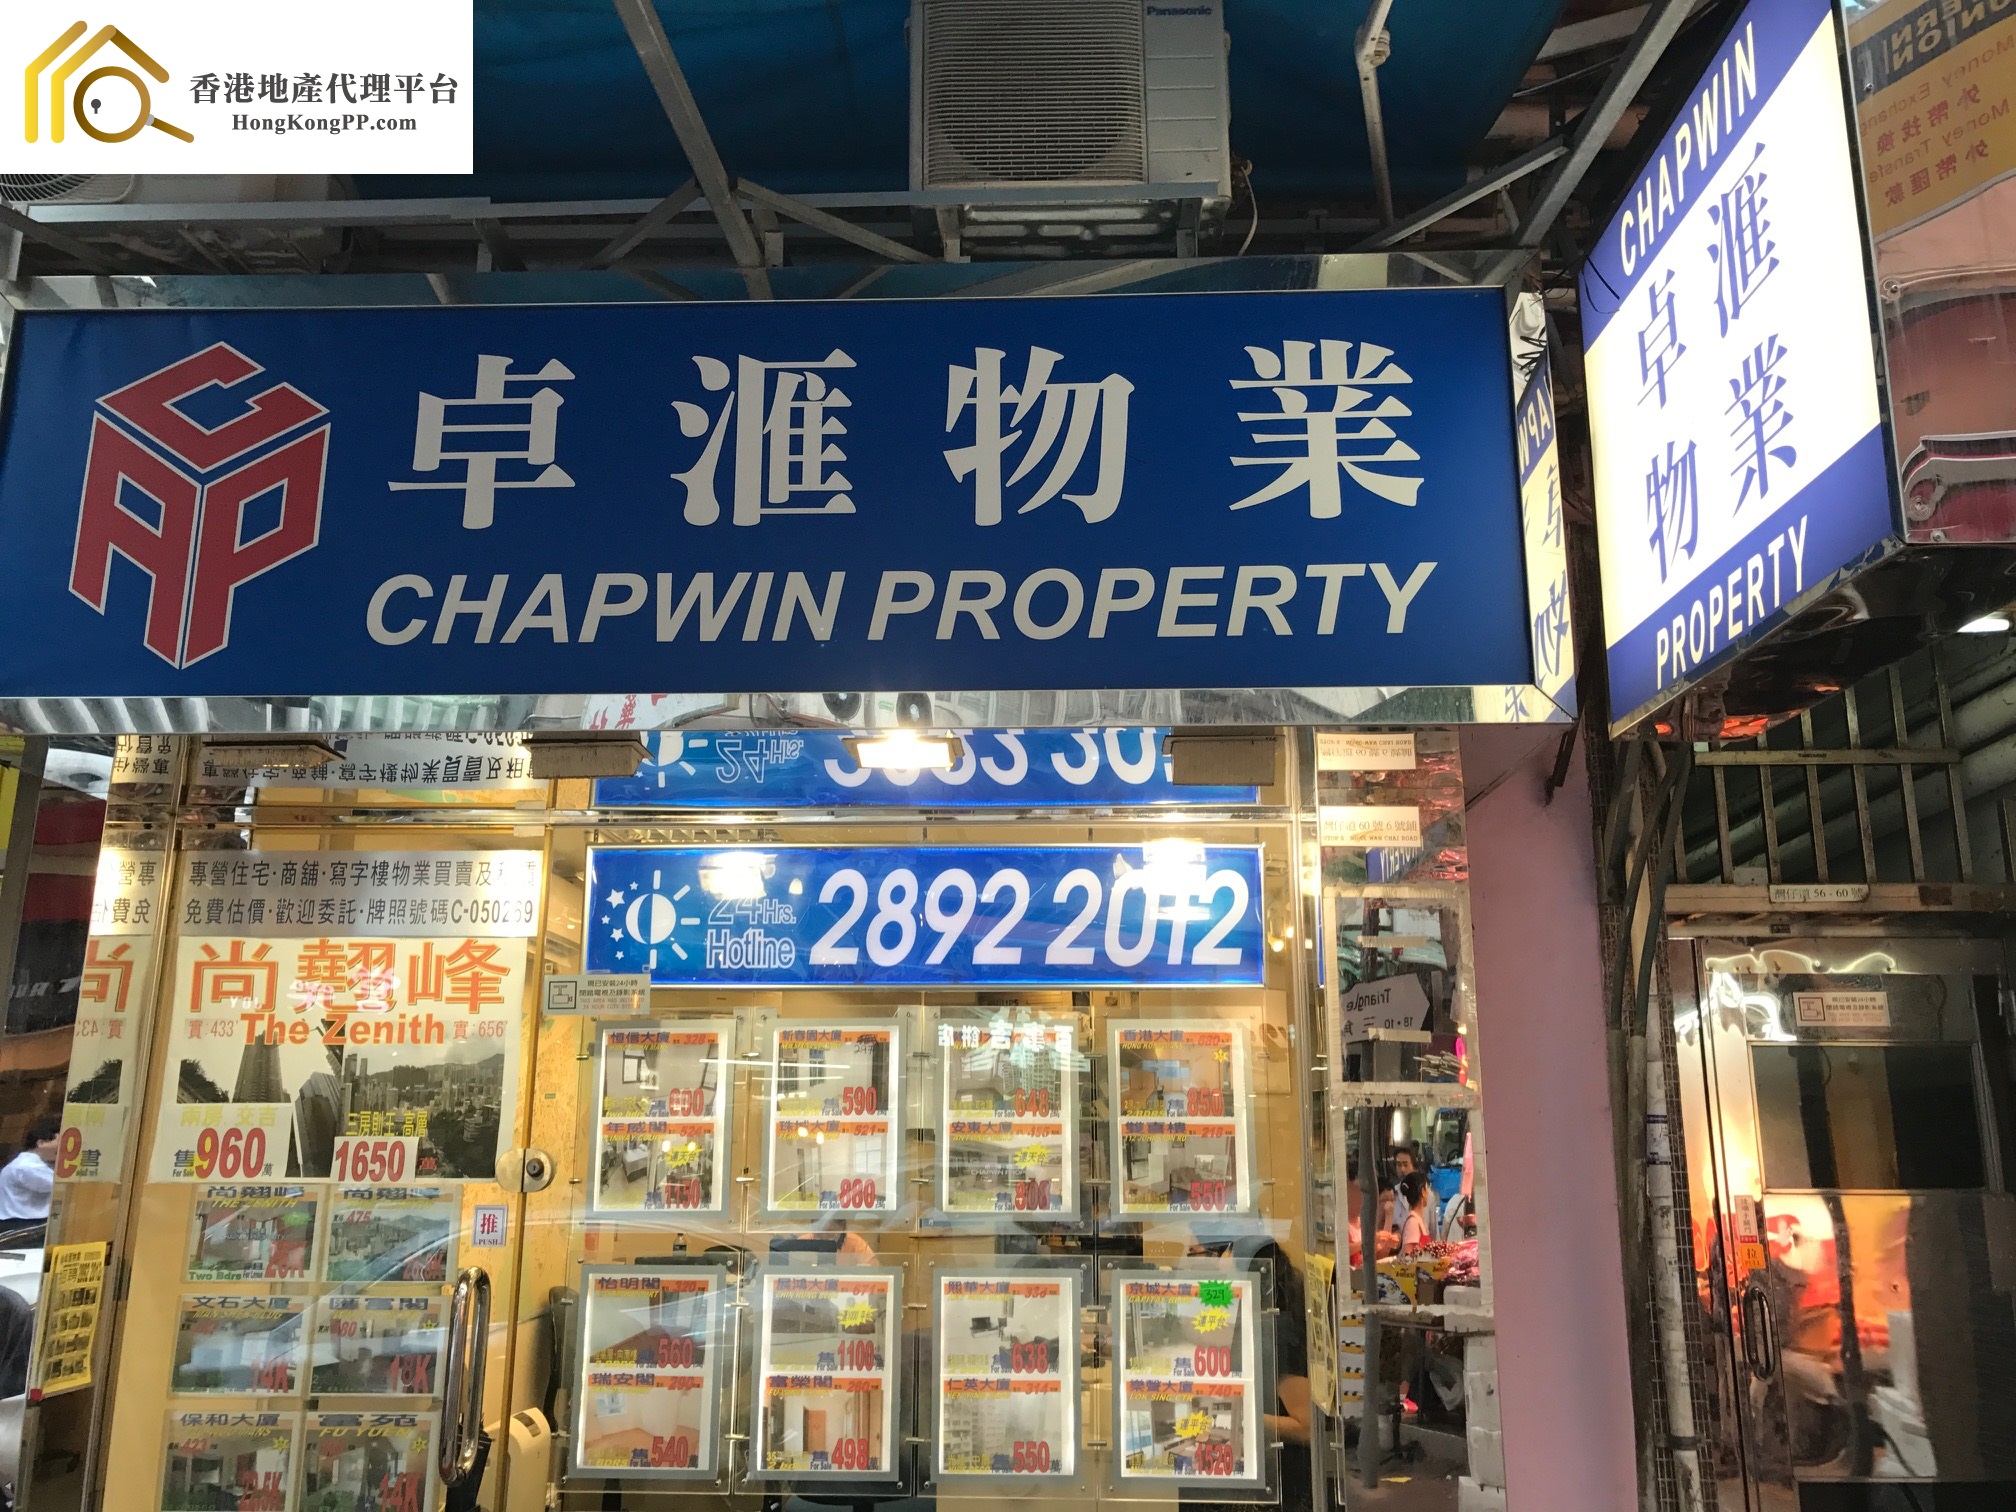 HousingEstate Agent: 卓匯物業 Chapwin Property Agency